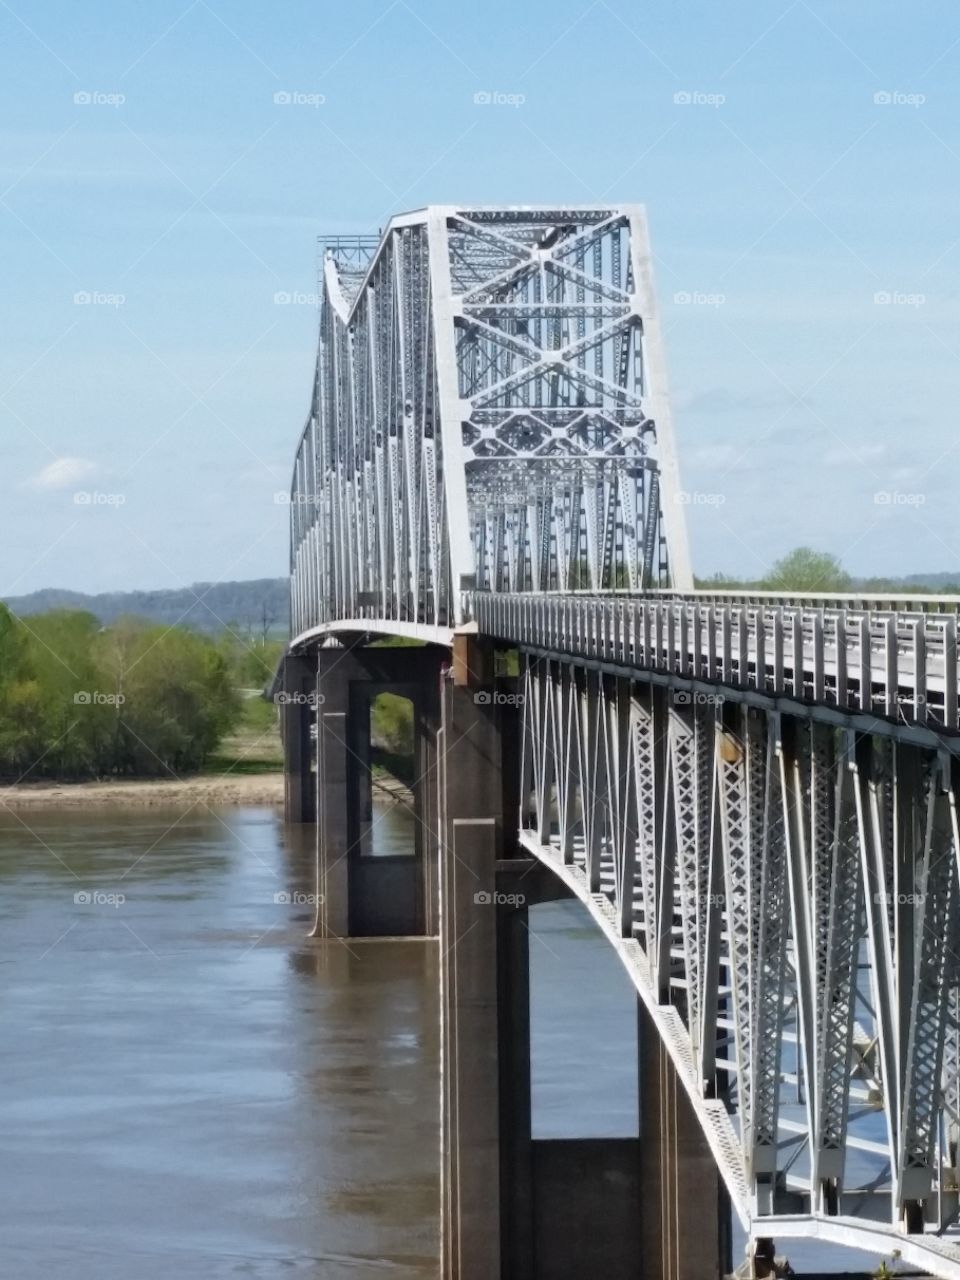 Bridge at the Mississippi River